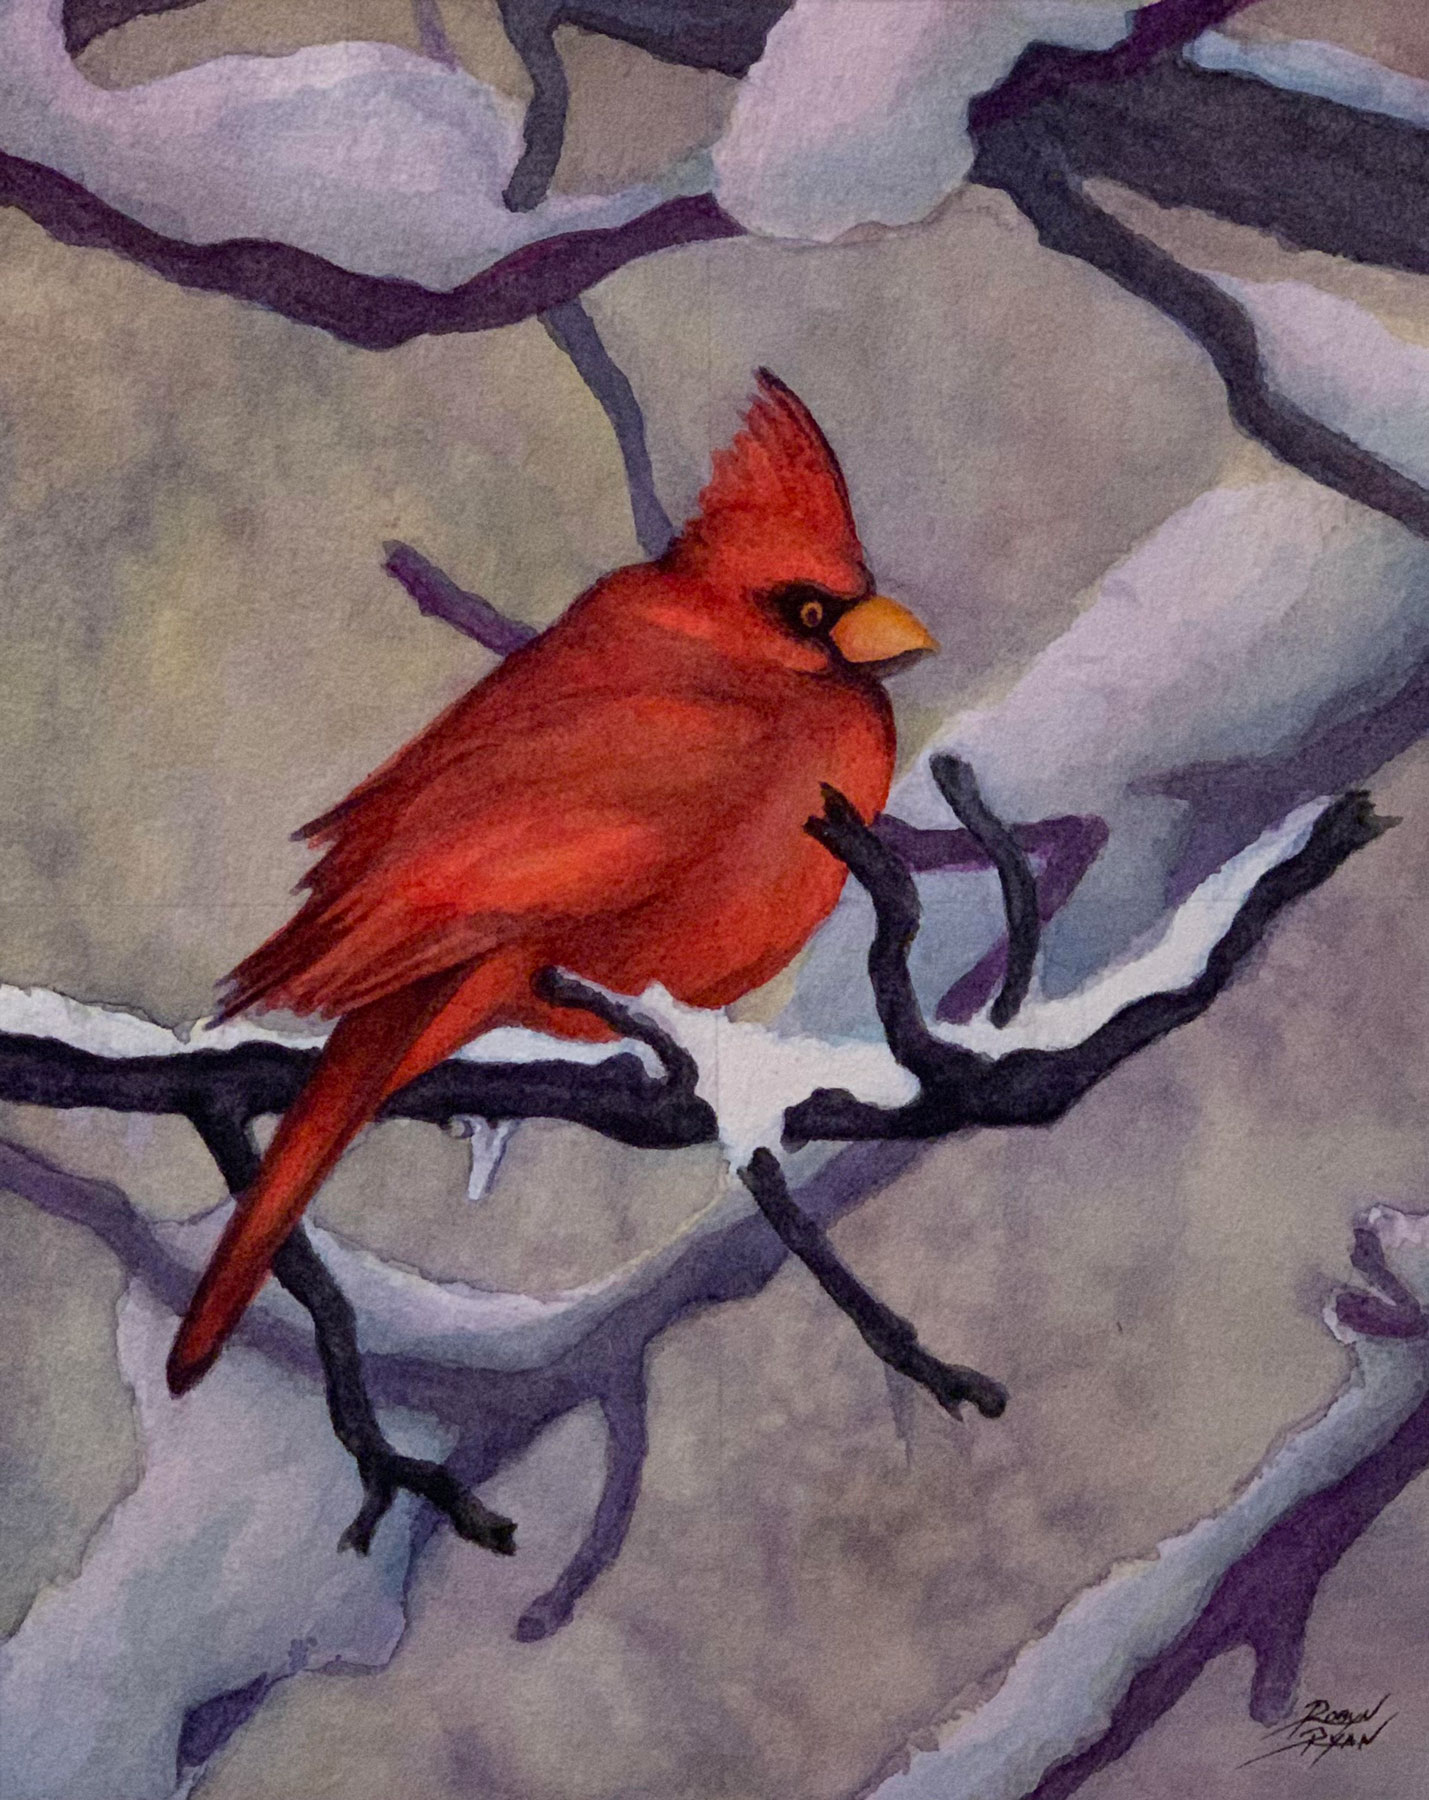 Robyn Ryan's Cardinal in Snow Watercolor